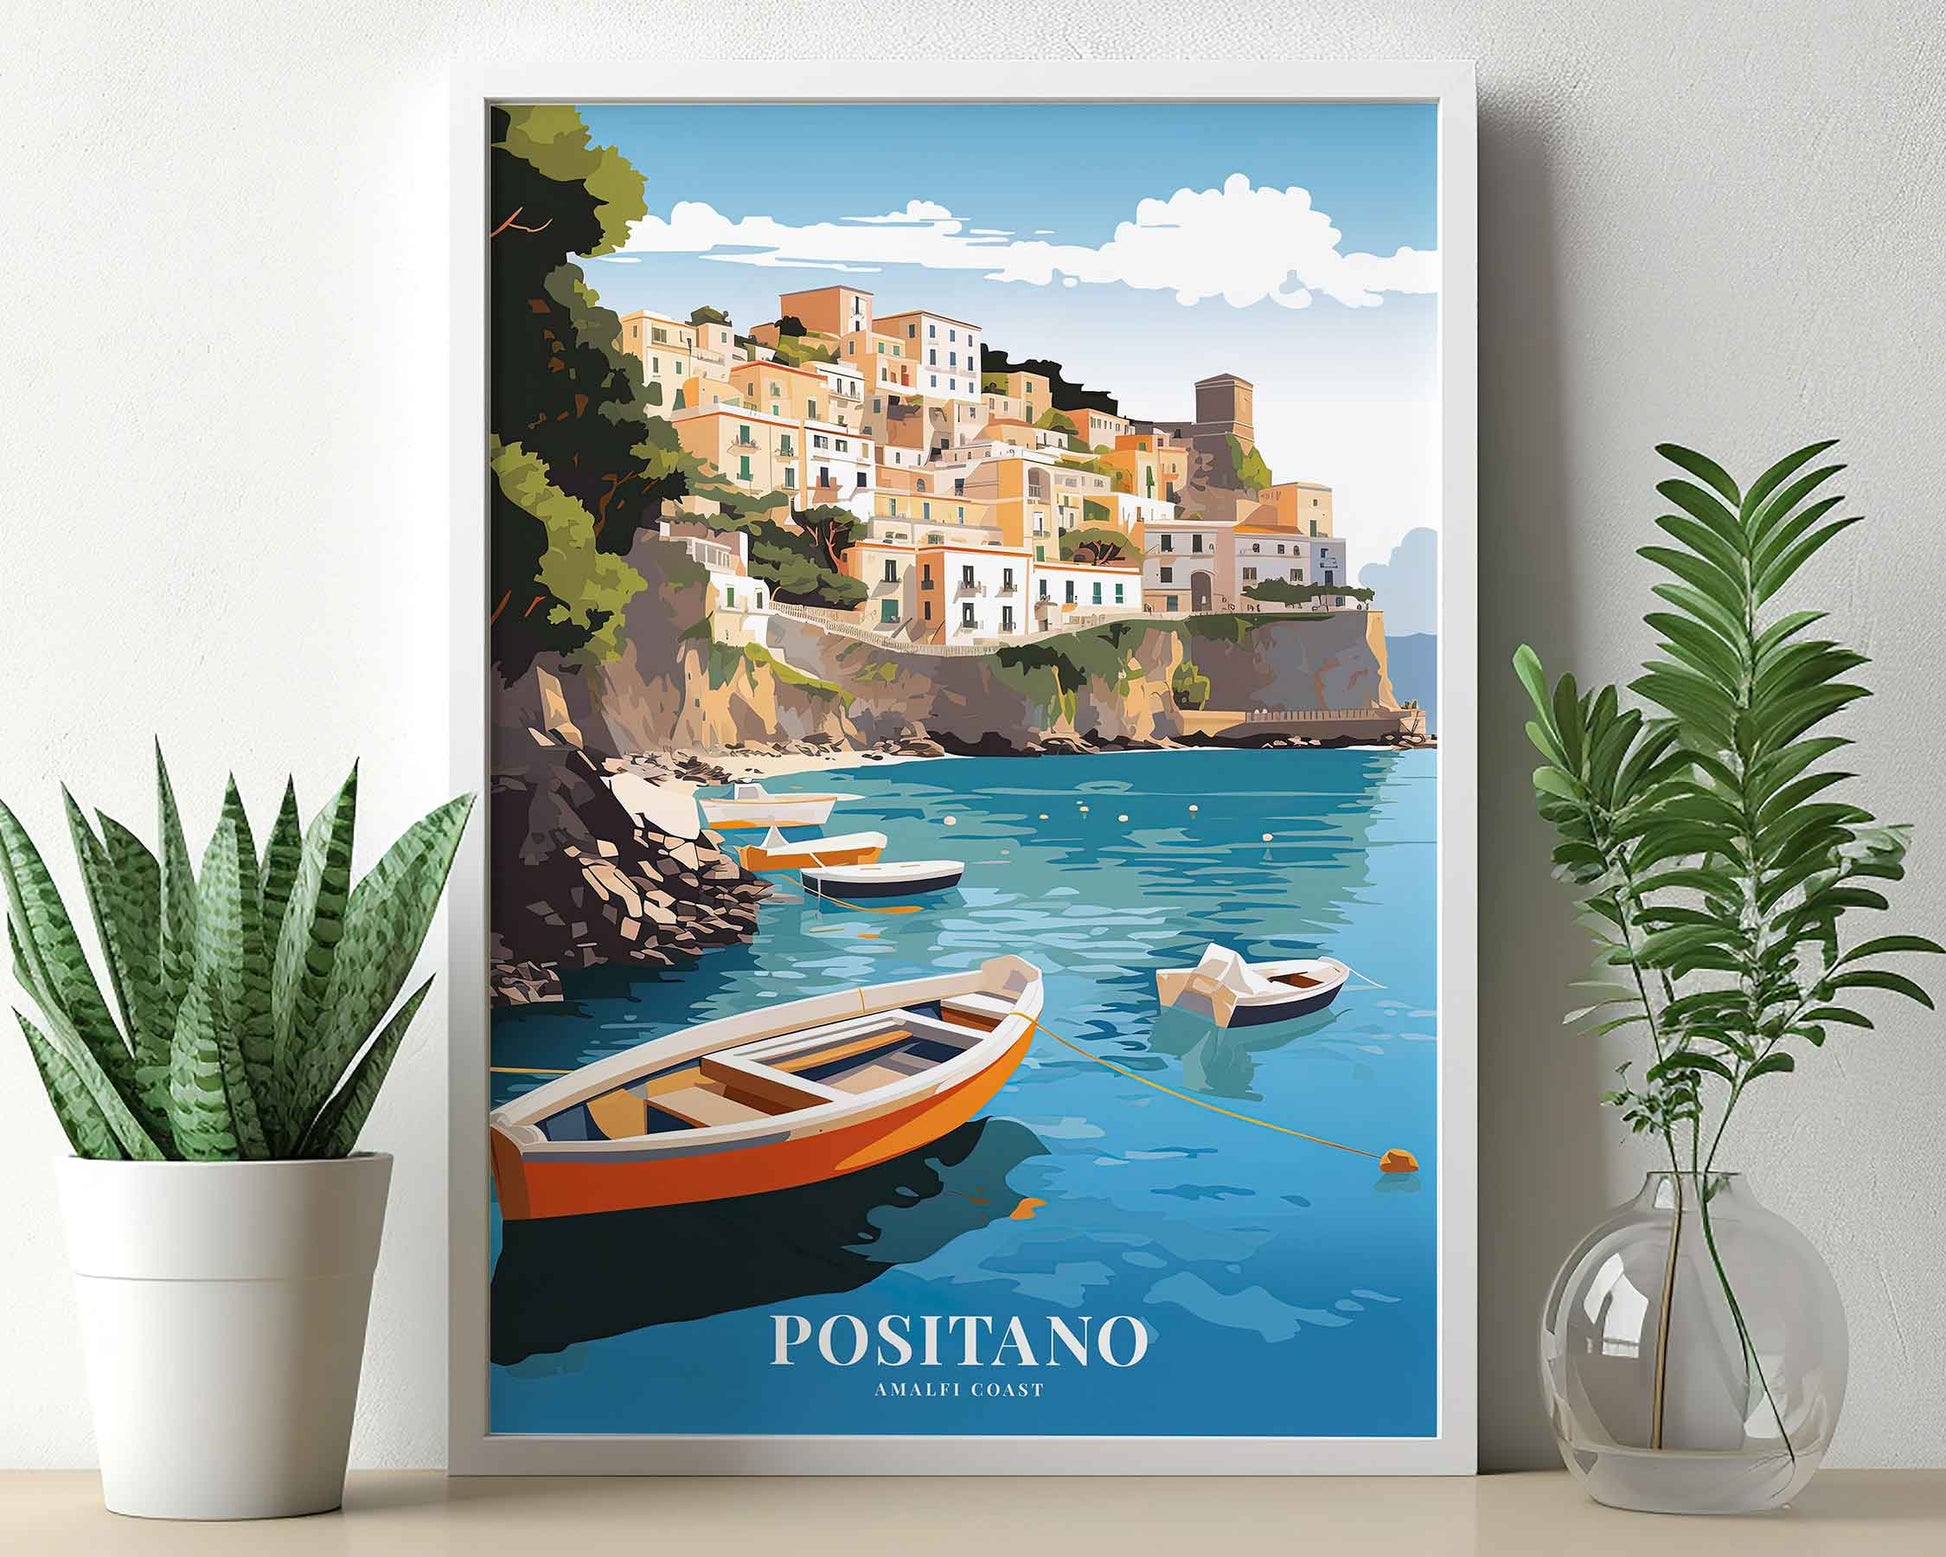 Framed Image of Positano Italy Travel Illustration Poster Prints Wall Art